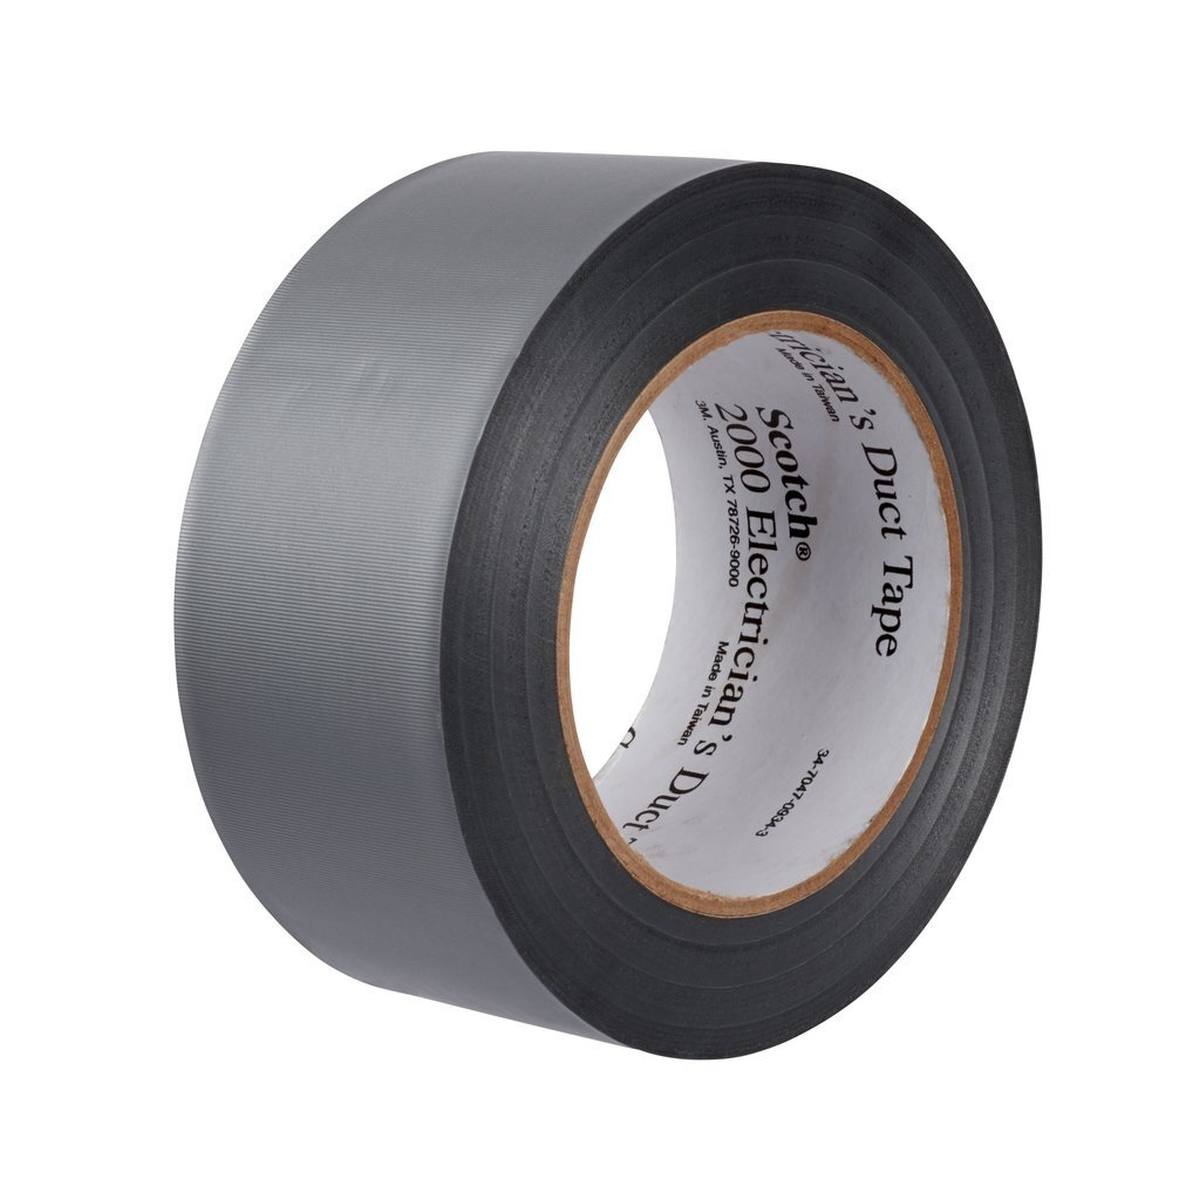 3M Scotch 2000 universal adhesive tape, gray, 50 mm x 46 m, 0.15 mm